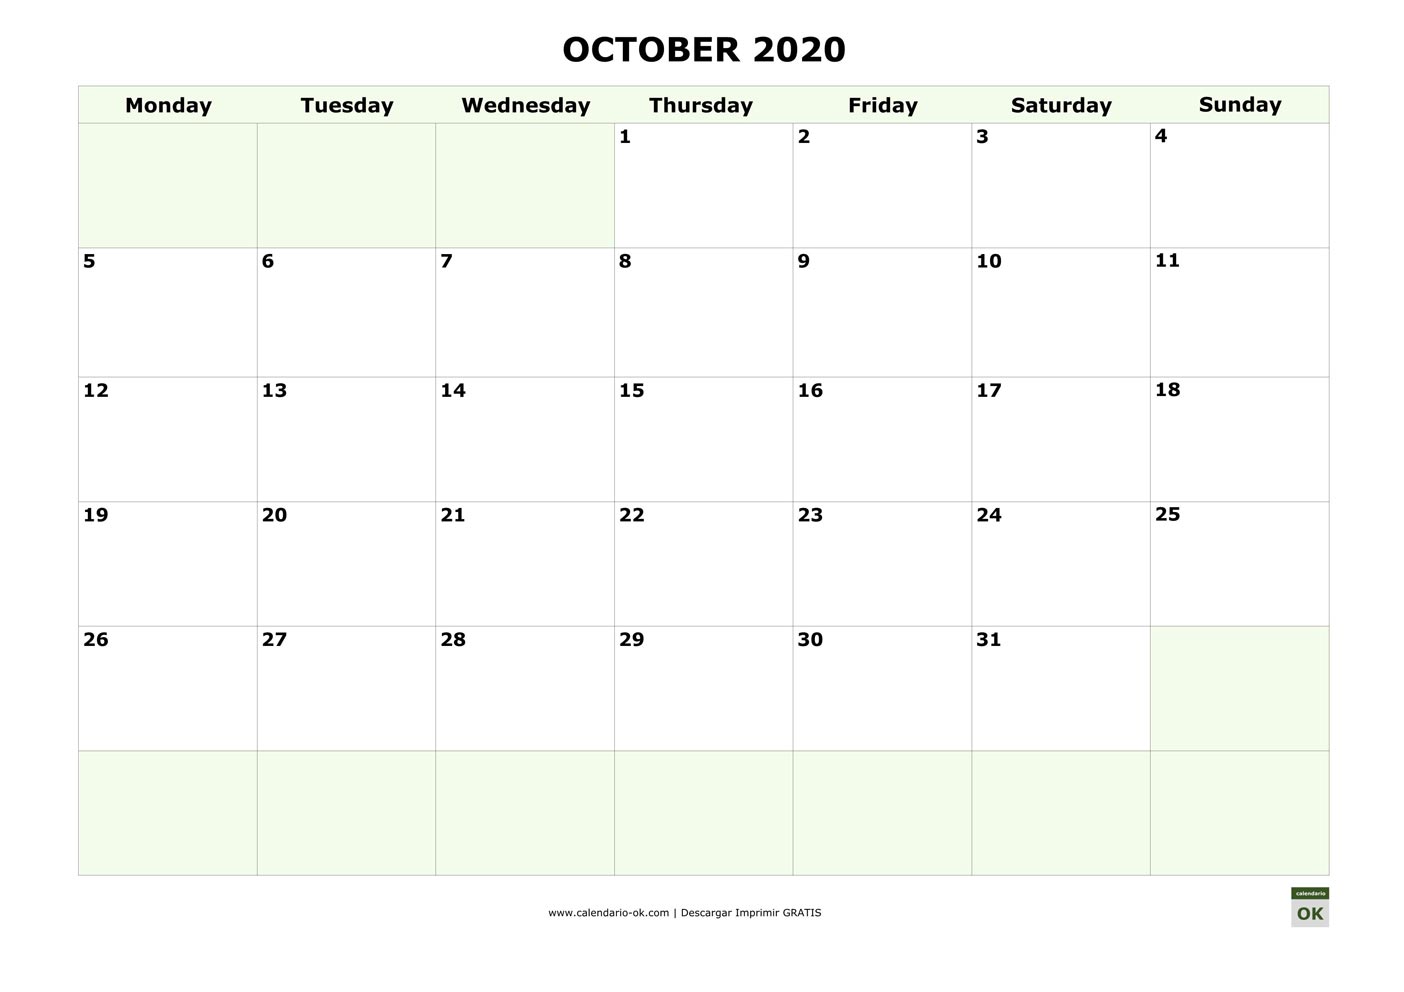 OCTUBRE 2020 calendario en INGLES